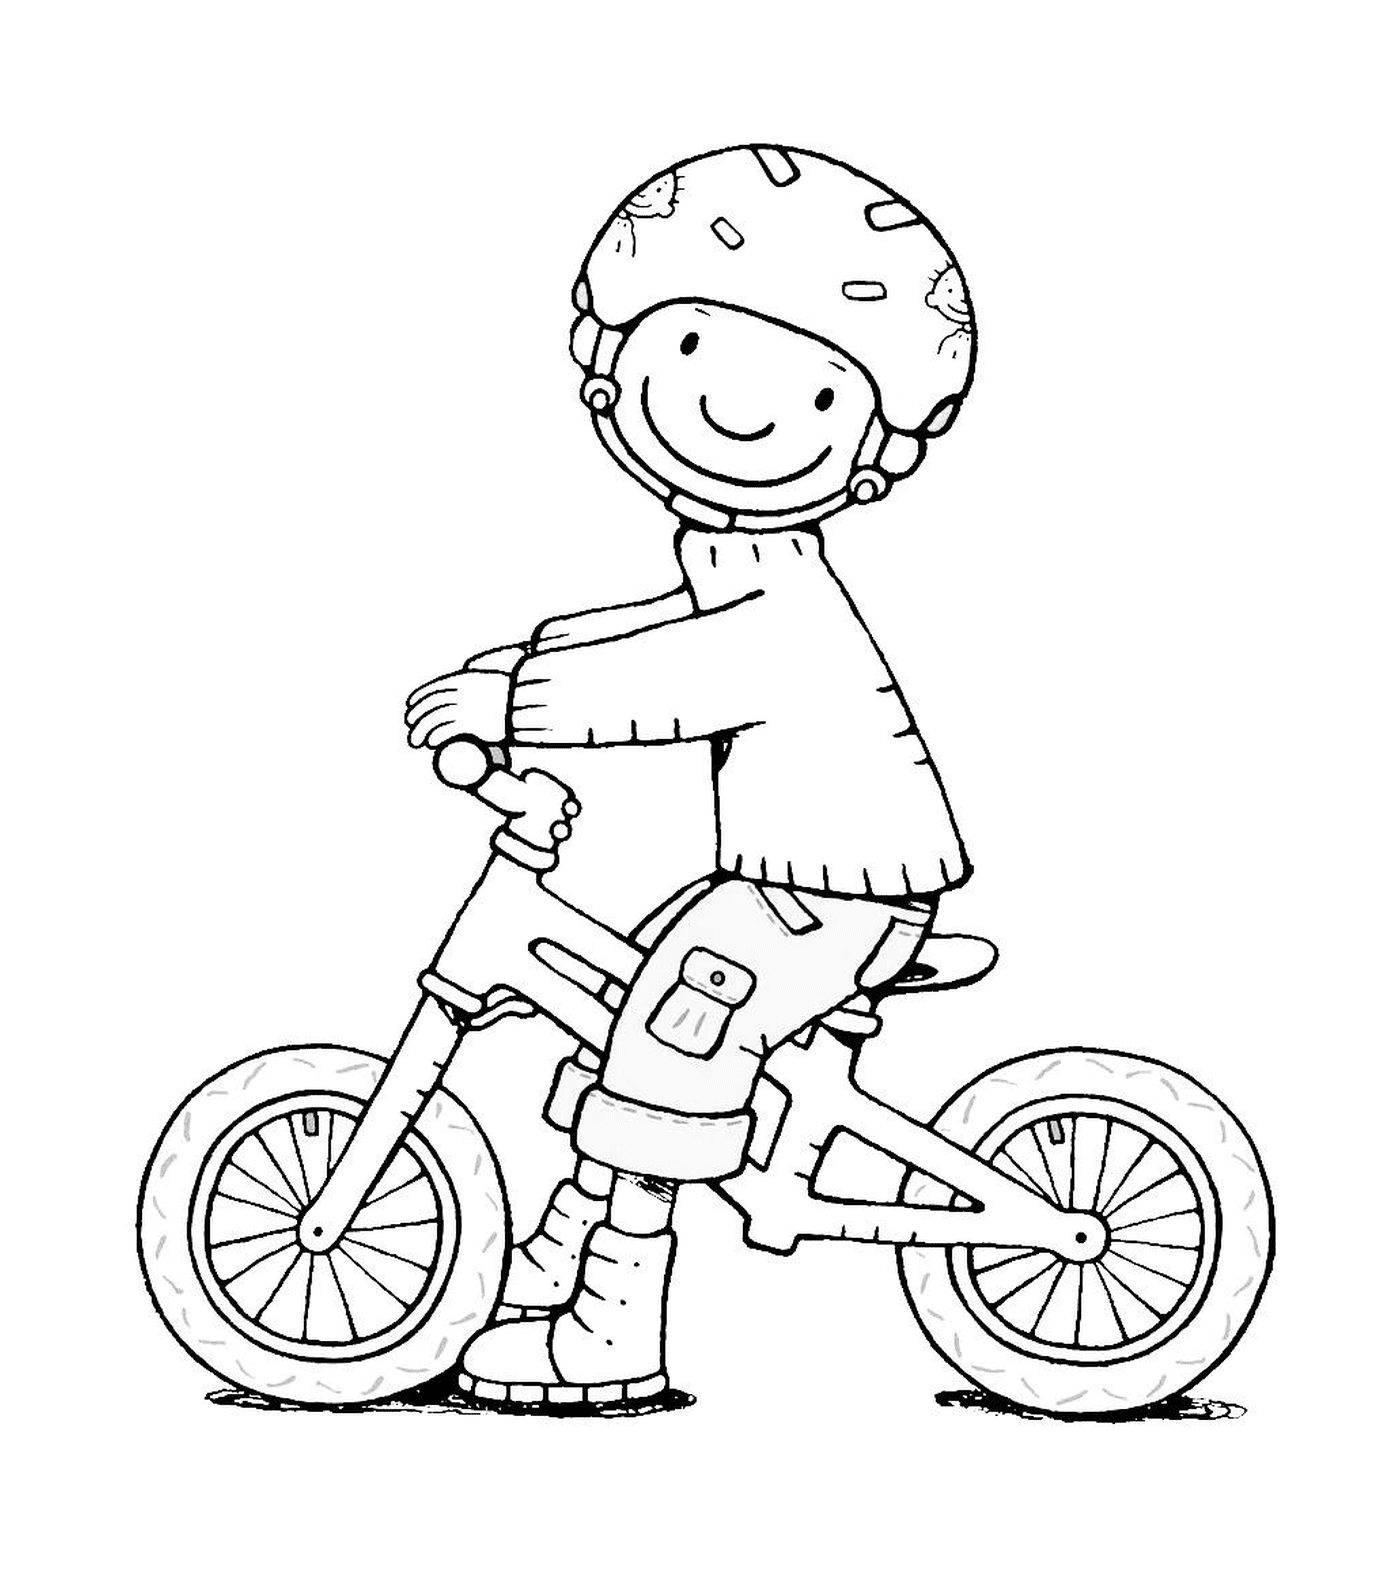  Deporte, bicicleta, chico en bicicleta 